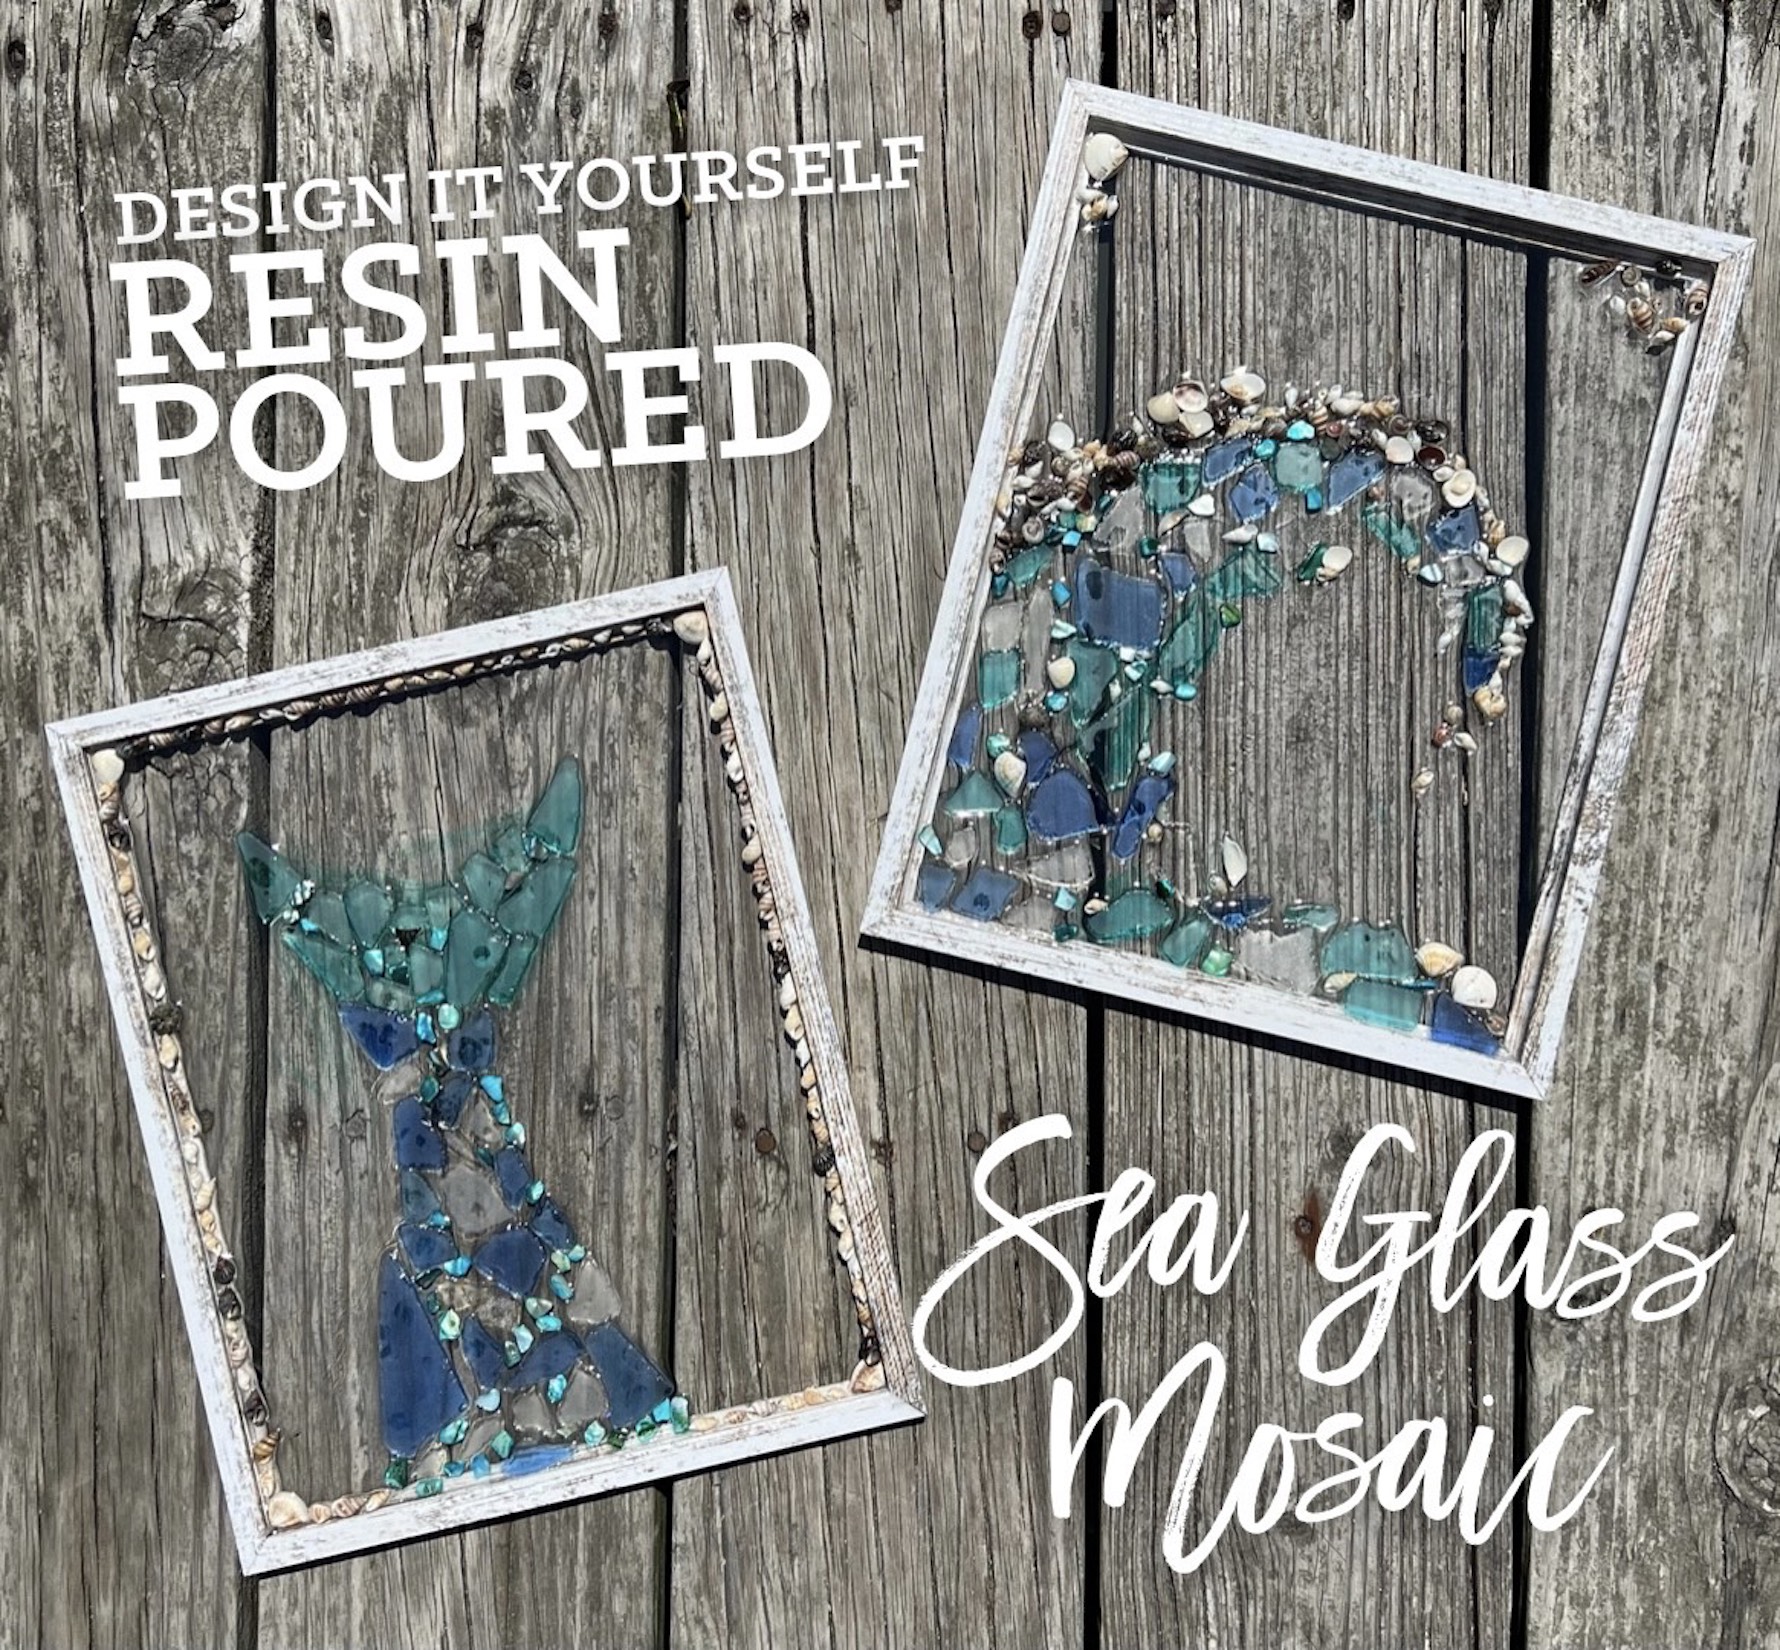 Sea Glass Mosaic Resin Pour Workshop